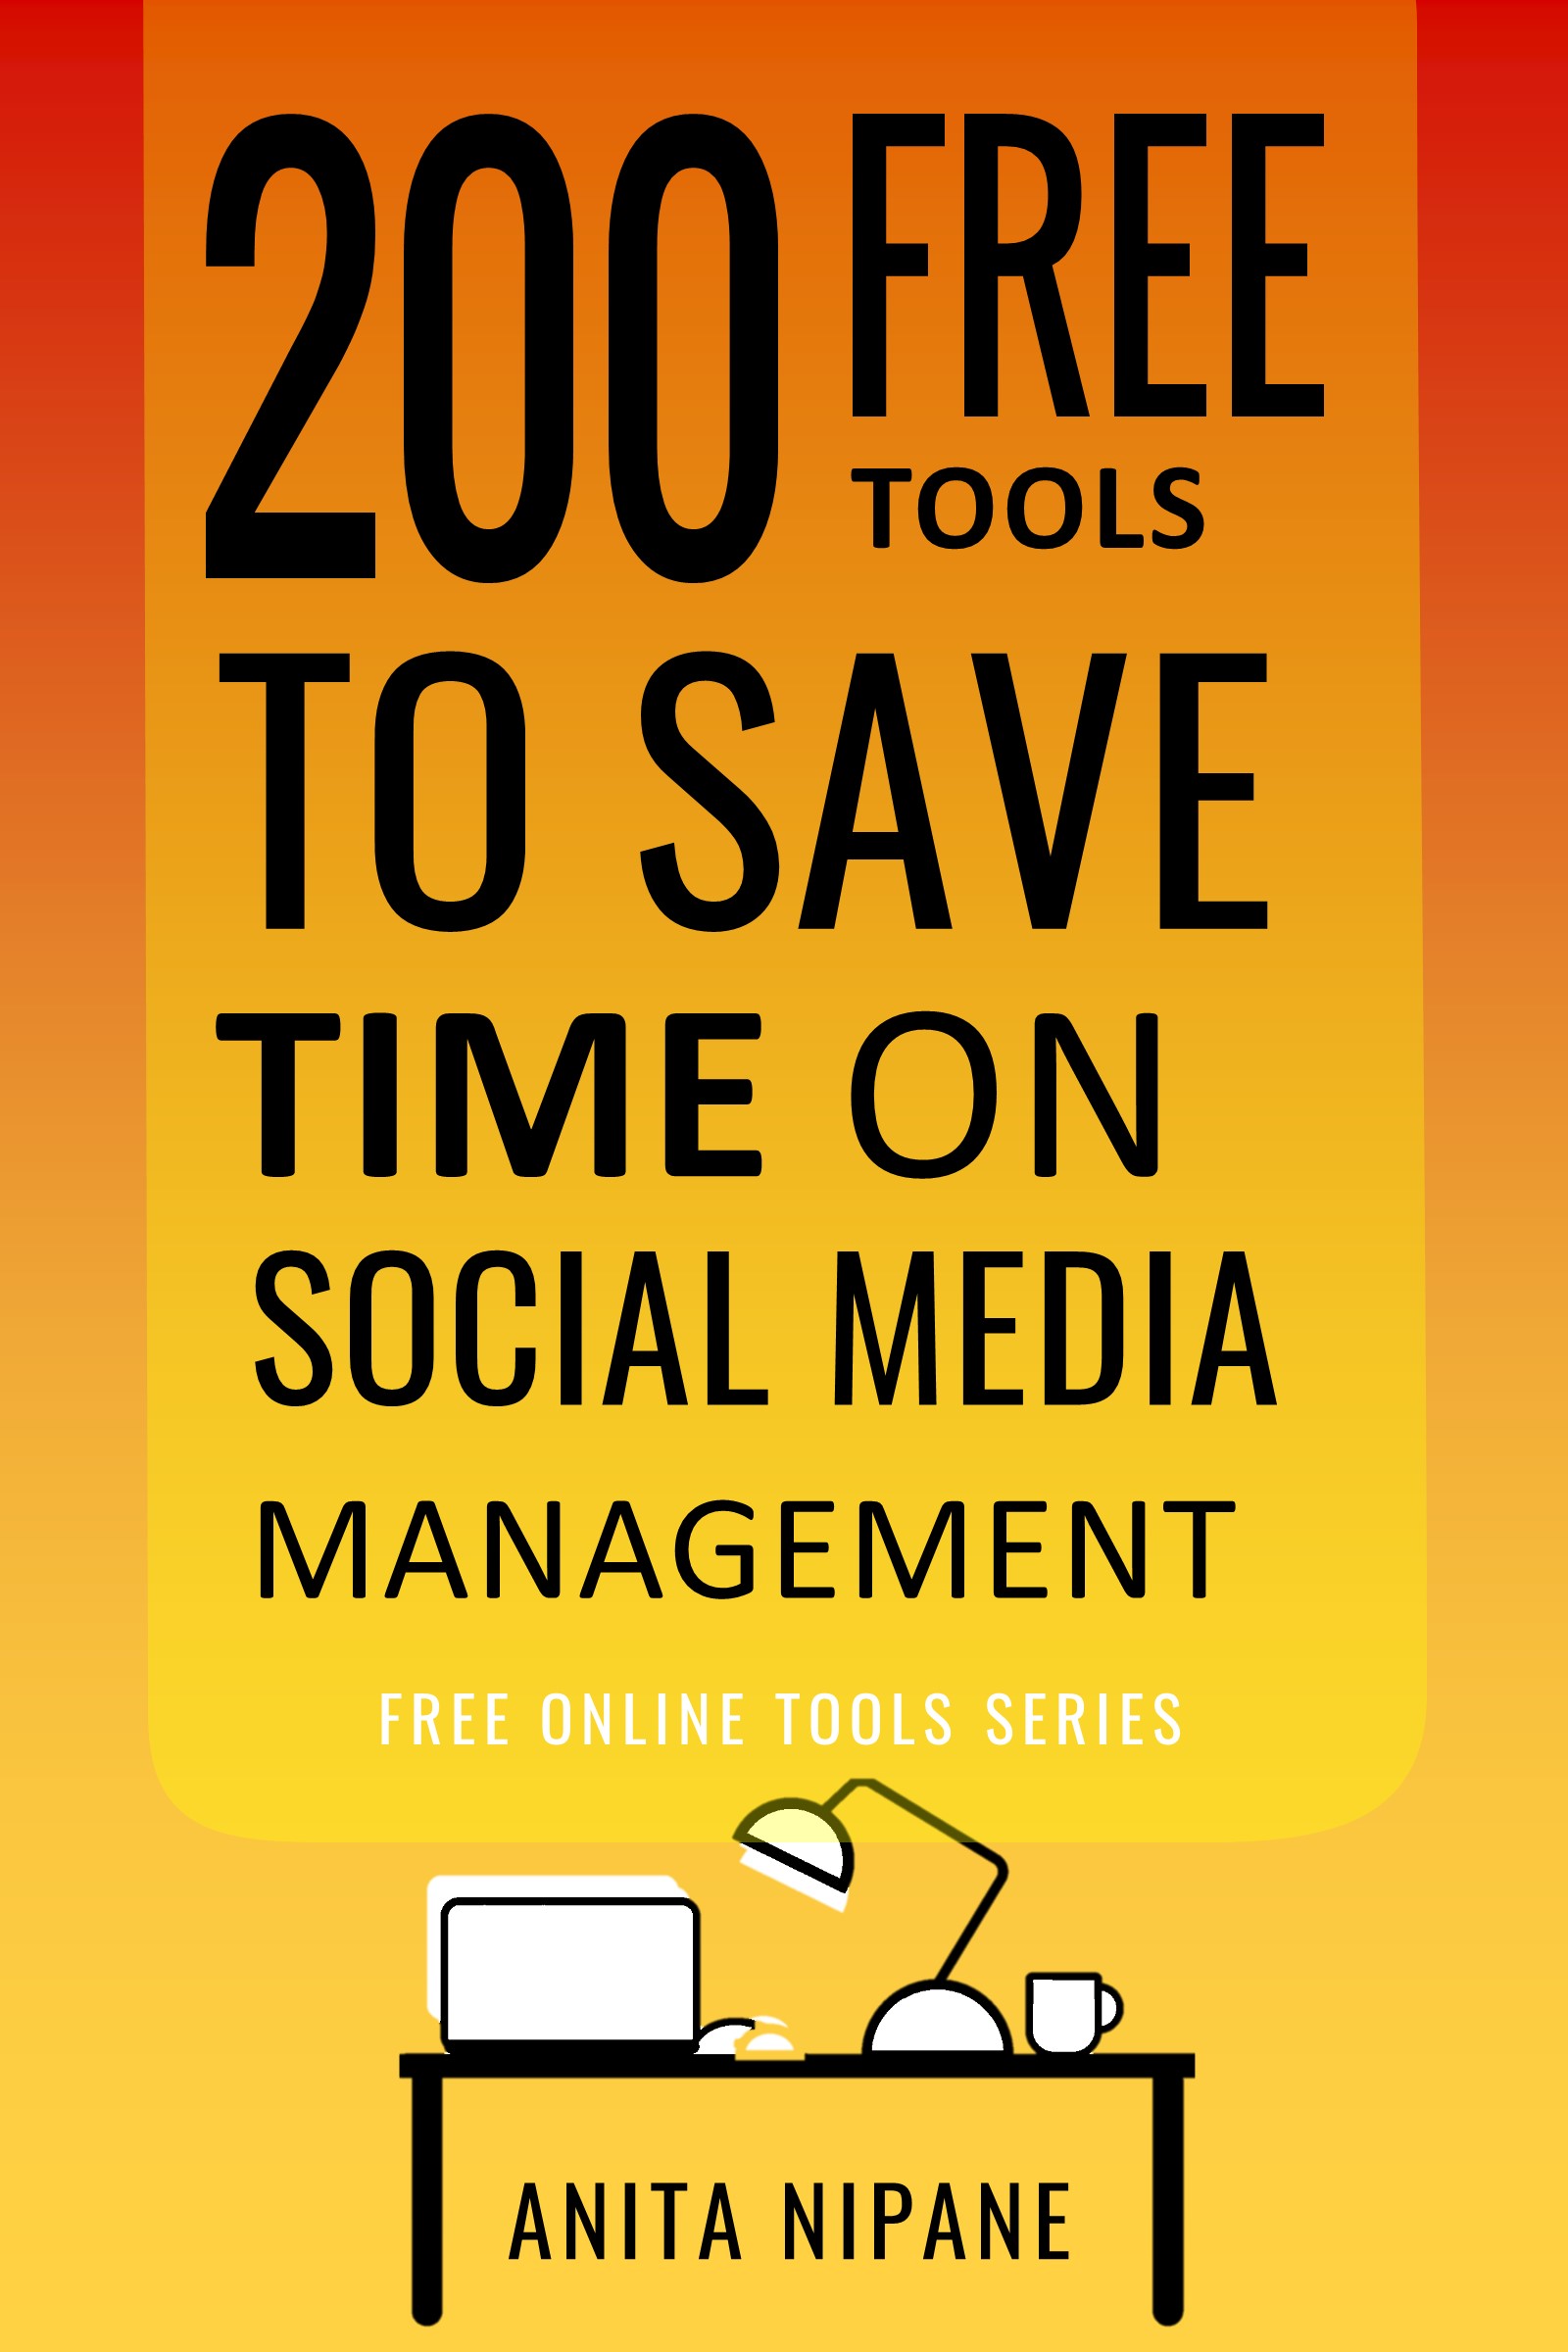 FREE: 200 Free Tools to Save Time on Social Media Managing by Anita Nipane